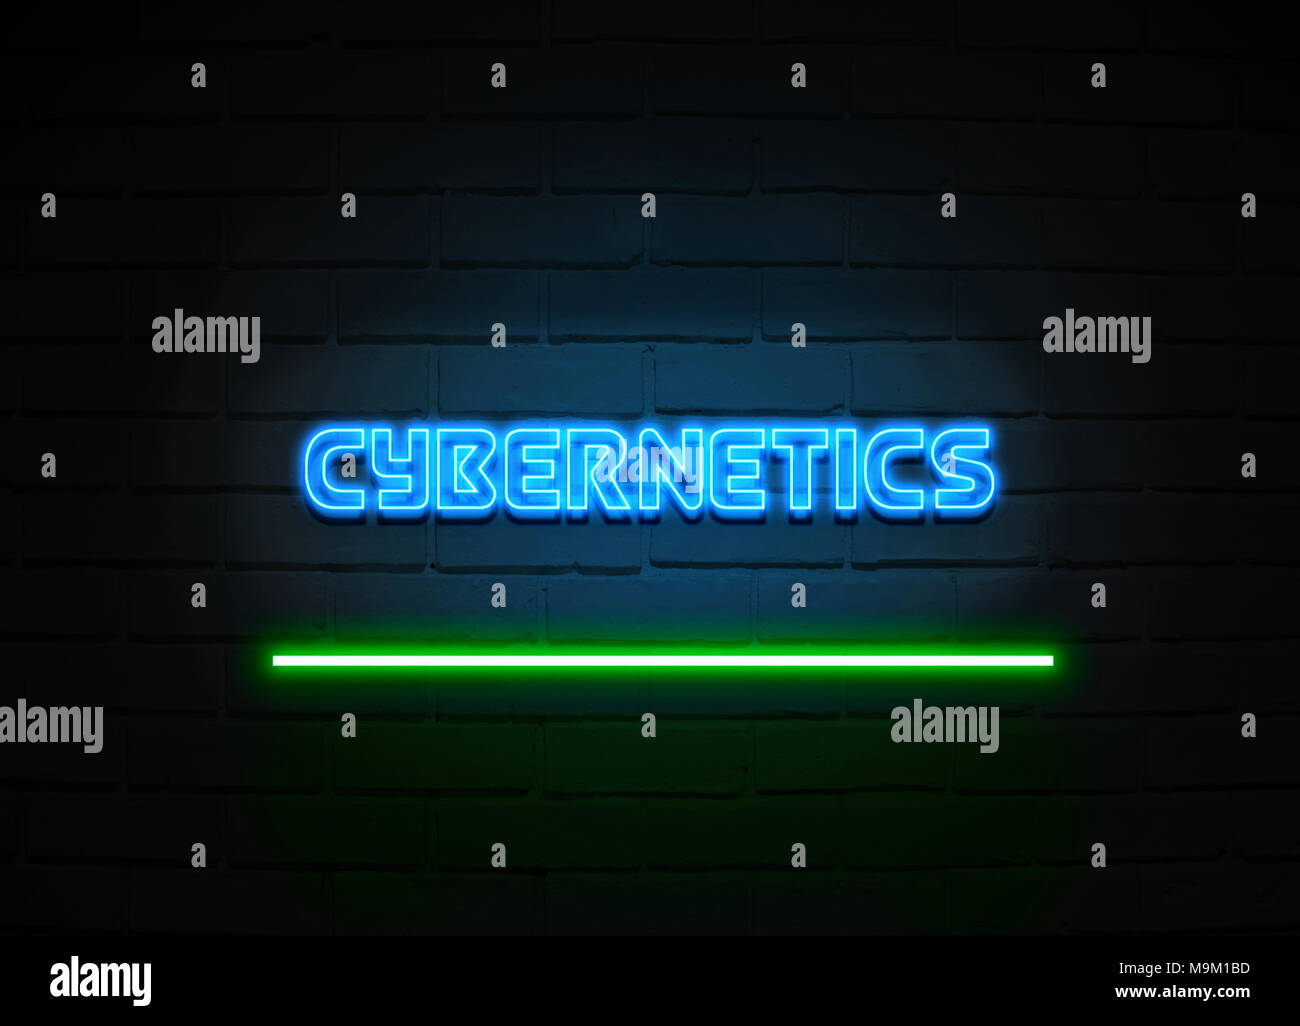 Kybernetik Leuchtreklame - glühende Leuchtreklame auf brickwall Wand - 3D-Royalty Free Stock Illustration dargestellt. Stockfoto